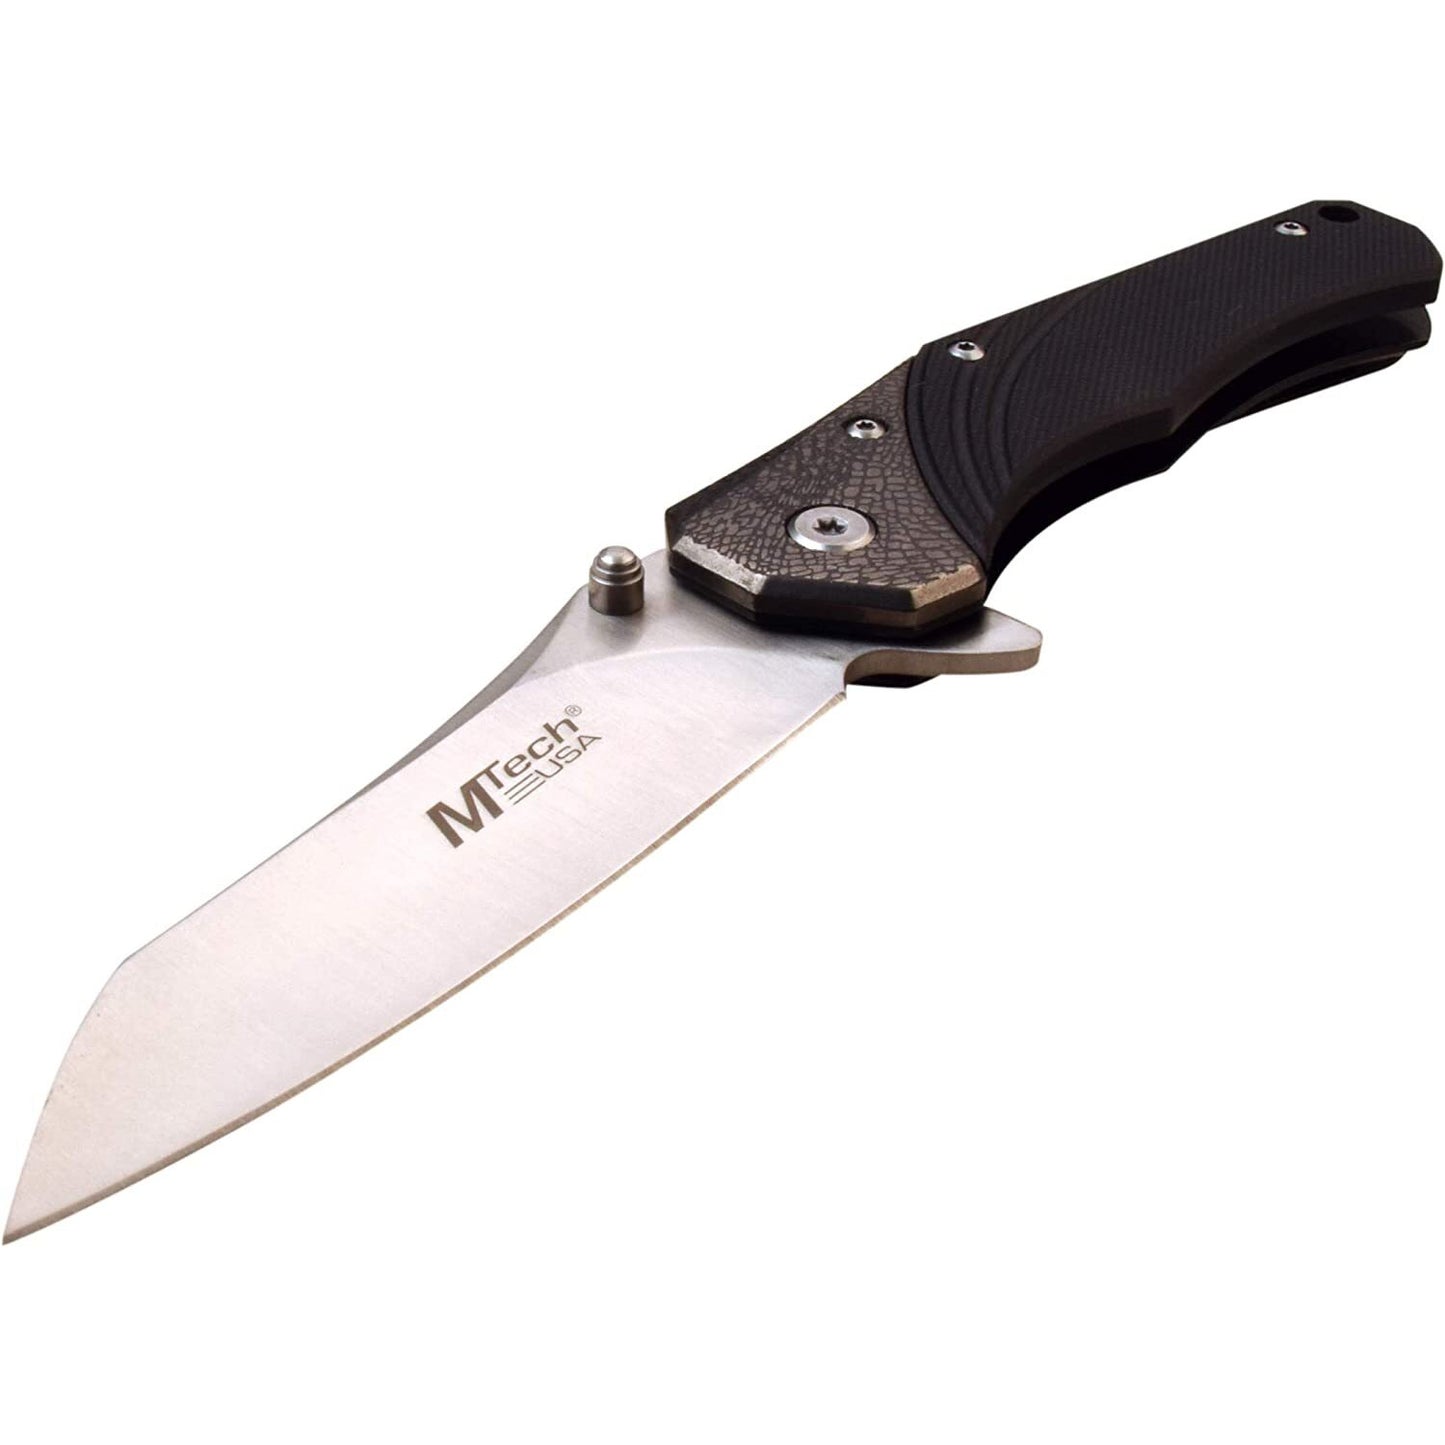 Mtech Mtech Sheepsfoot Fine Edge Blade Folding Pocket Knife - 4.5 Inches G10 Handle #mt-1103Gy Dim Gray